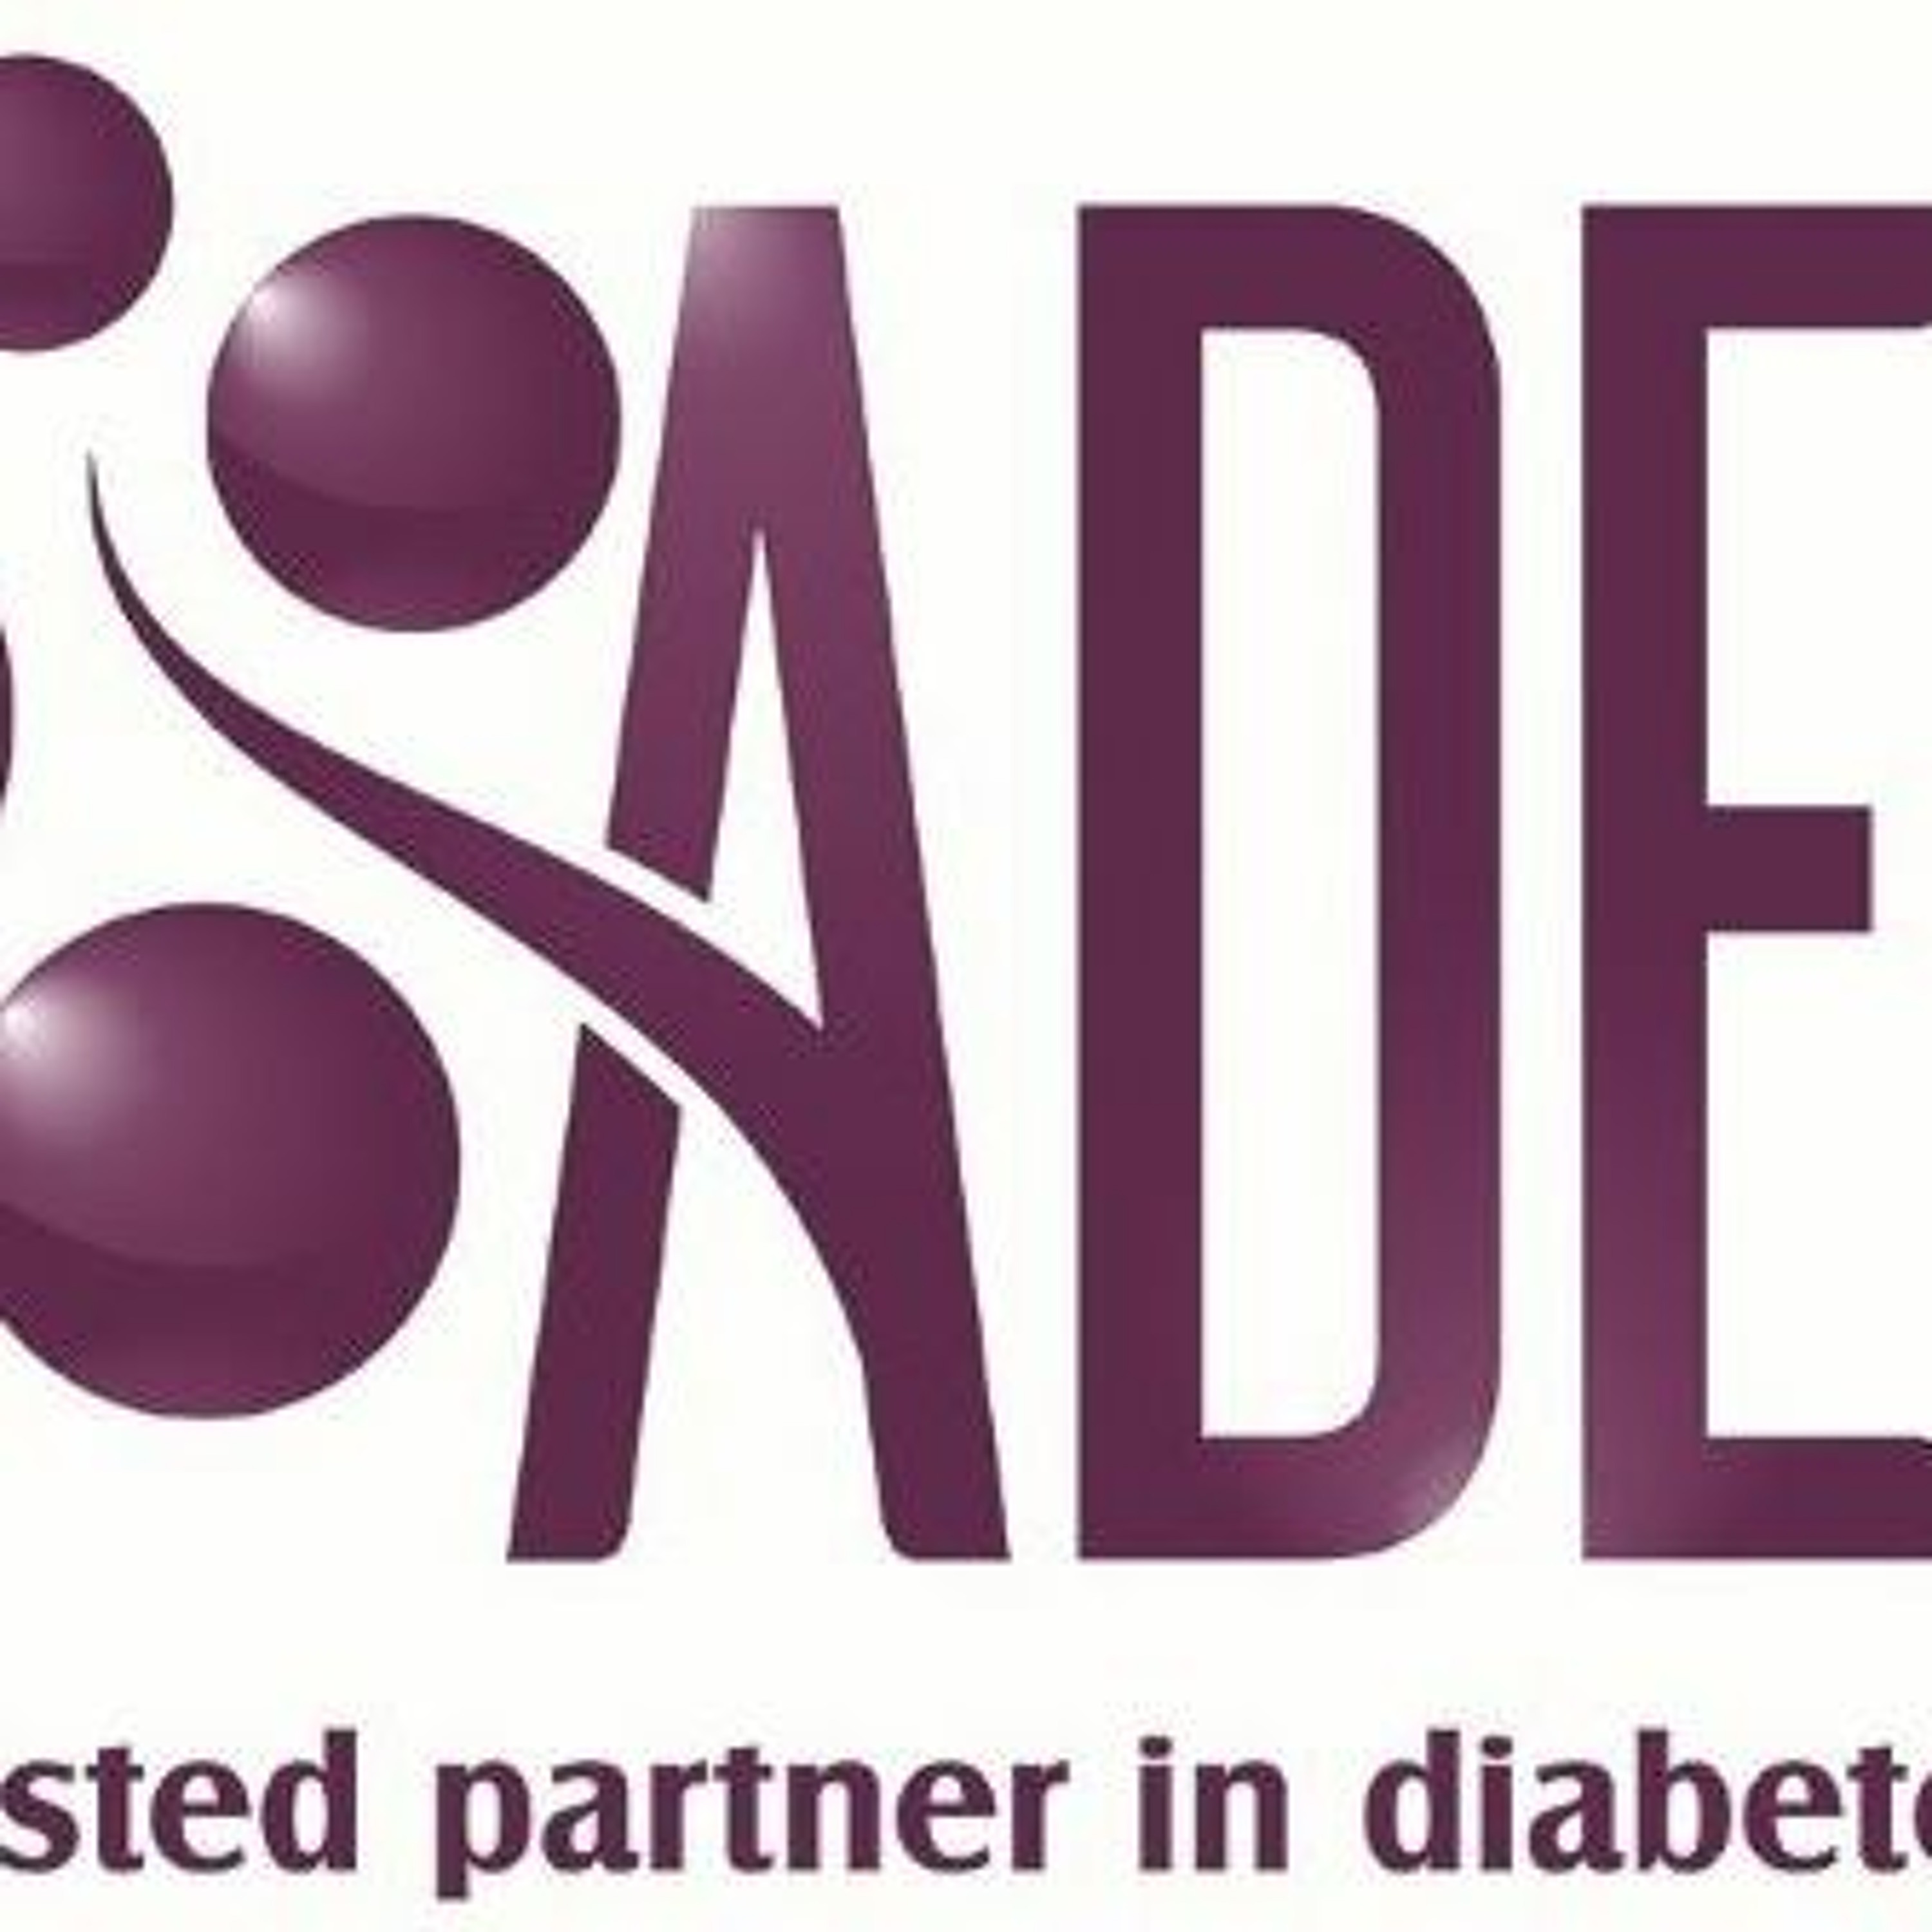 School Management in Paediatric Diabetes Podcast